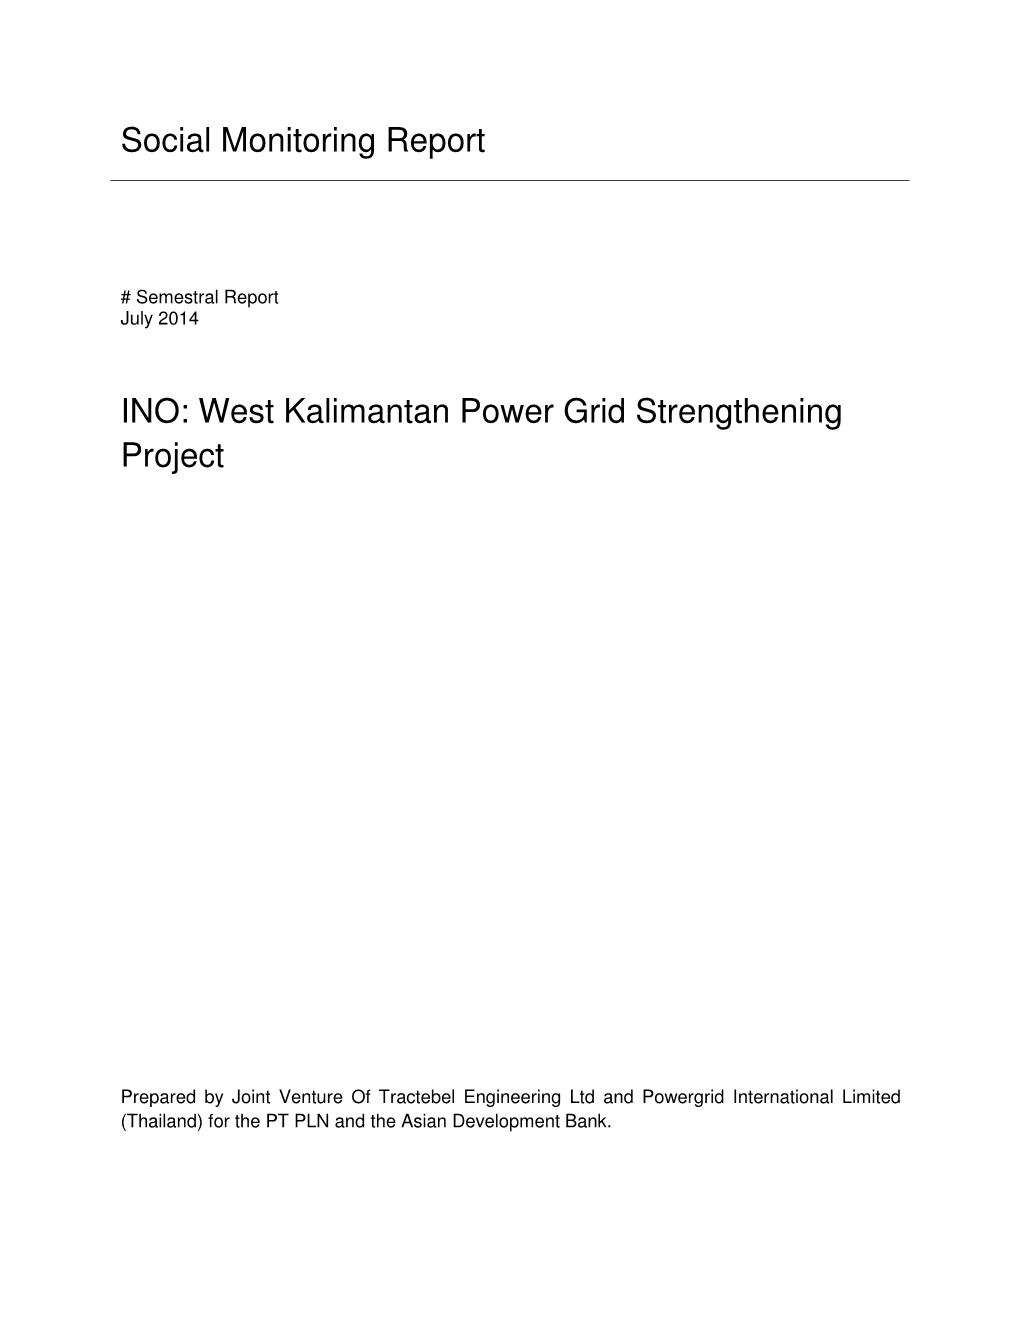 West Kalimantan Power Grid Strengthening Project